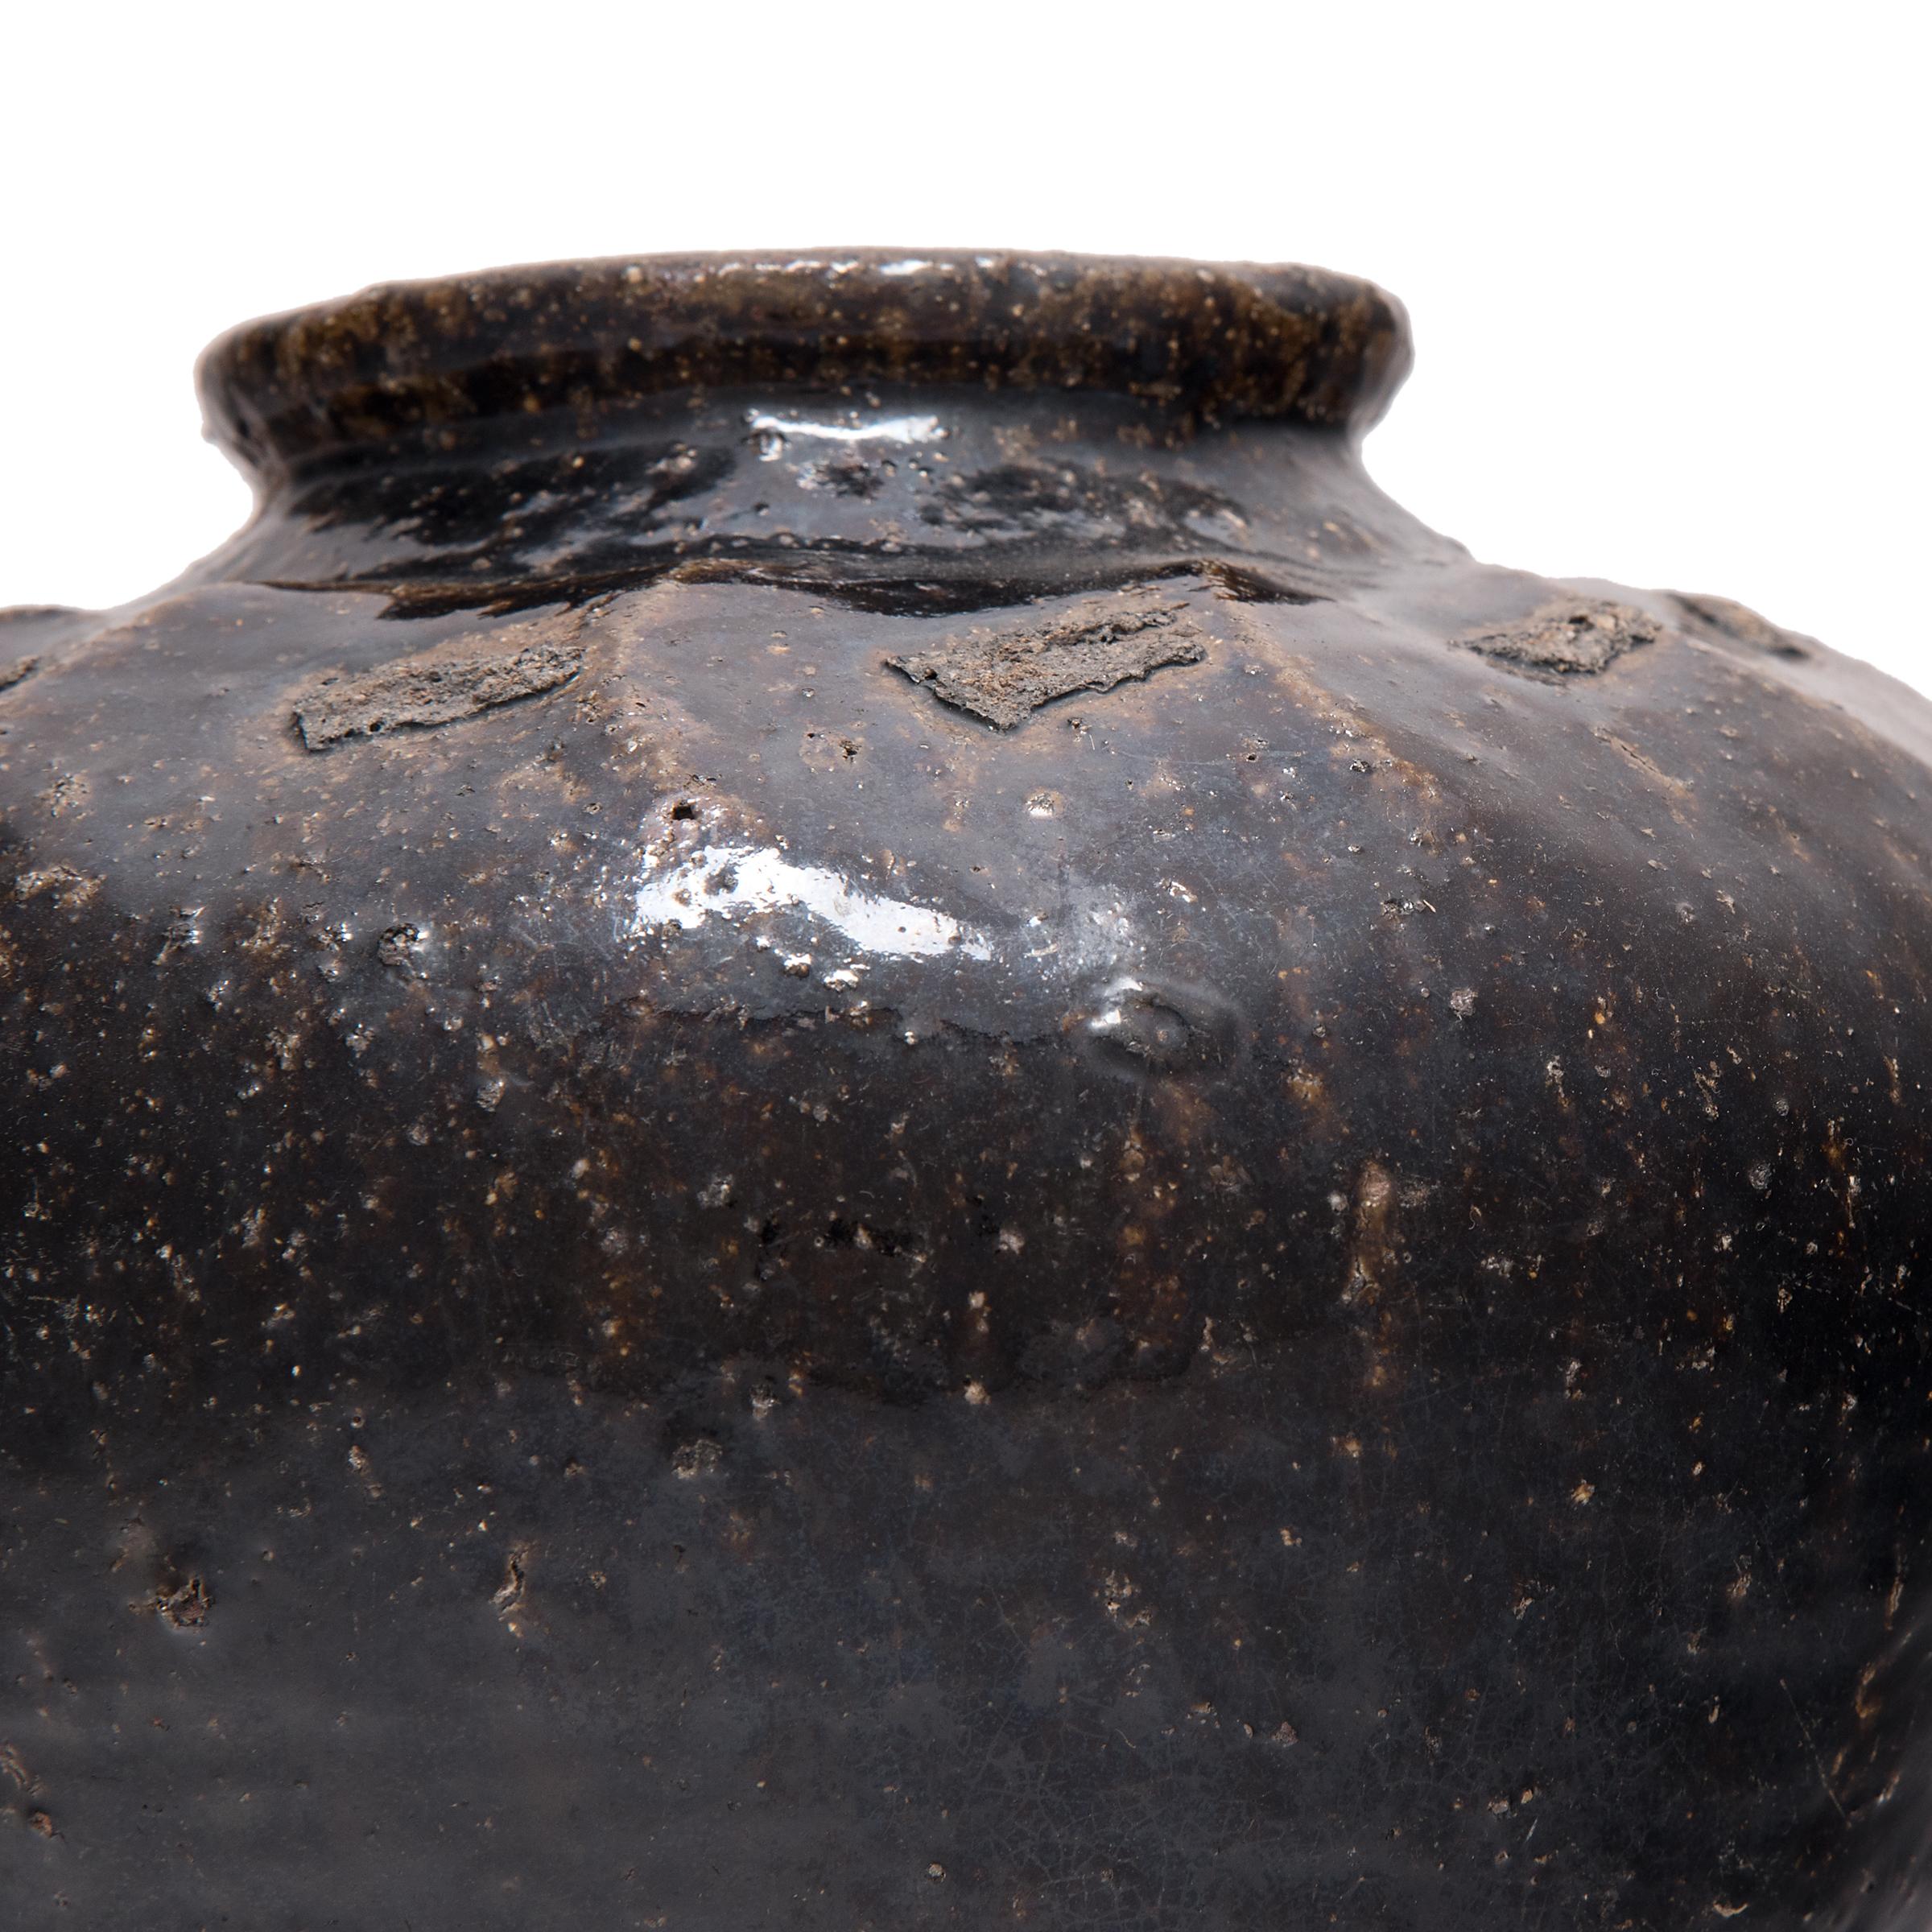 20th Century Provincial Chinese Salt Jar, c. 1900